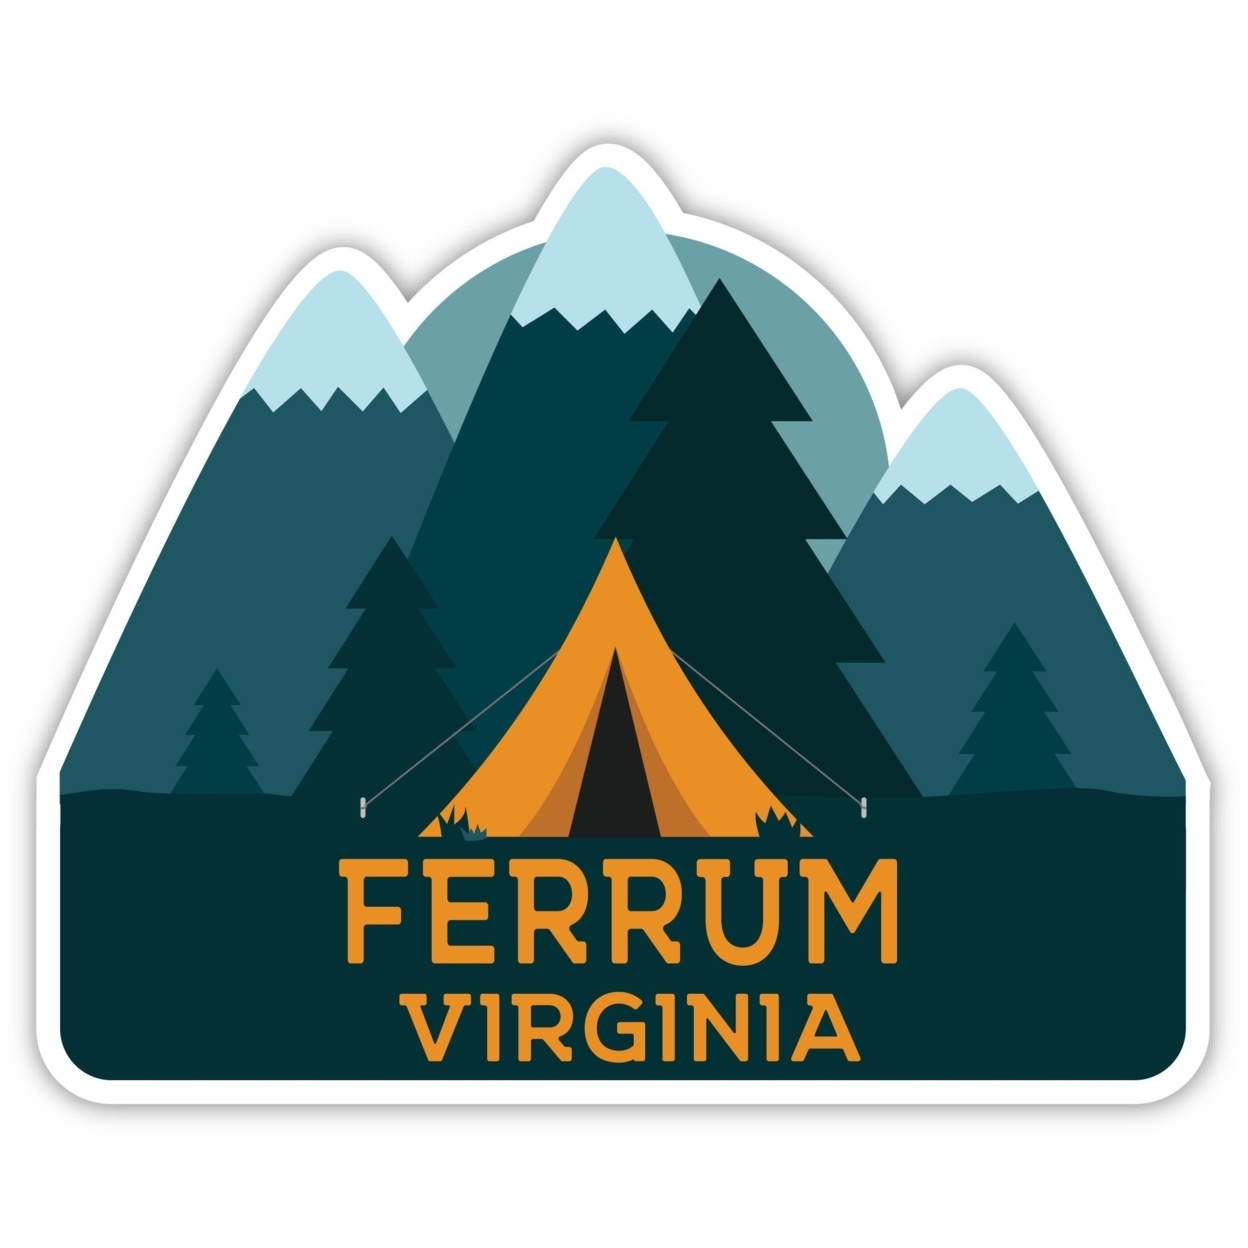 Ferrum Virginia Souvenir Decorative Stickers (Choose Theme And Size) - 4-Pack, 8-Inch, Tent